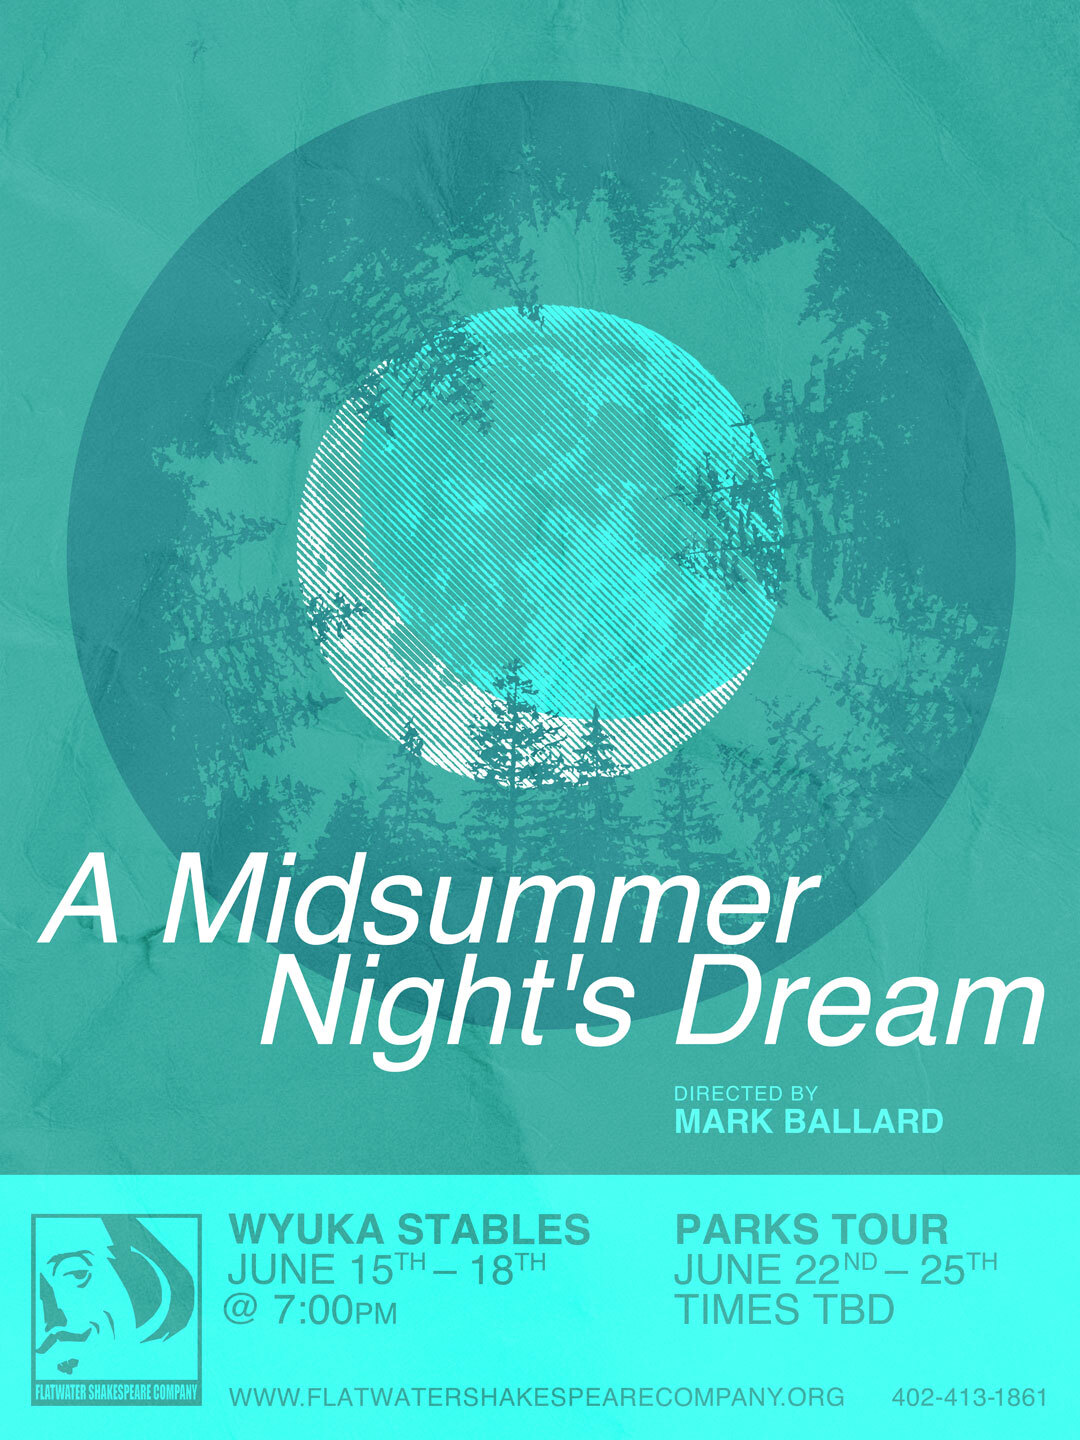 6/16 STU - STUDENT: Friday, June 16, 2023 | 7:00 p.m. - 9:00 p.m. CST | Wyuka Stables (A Midsummer Night's Dream)